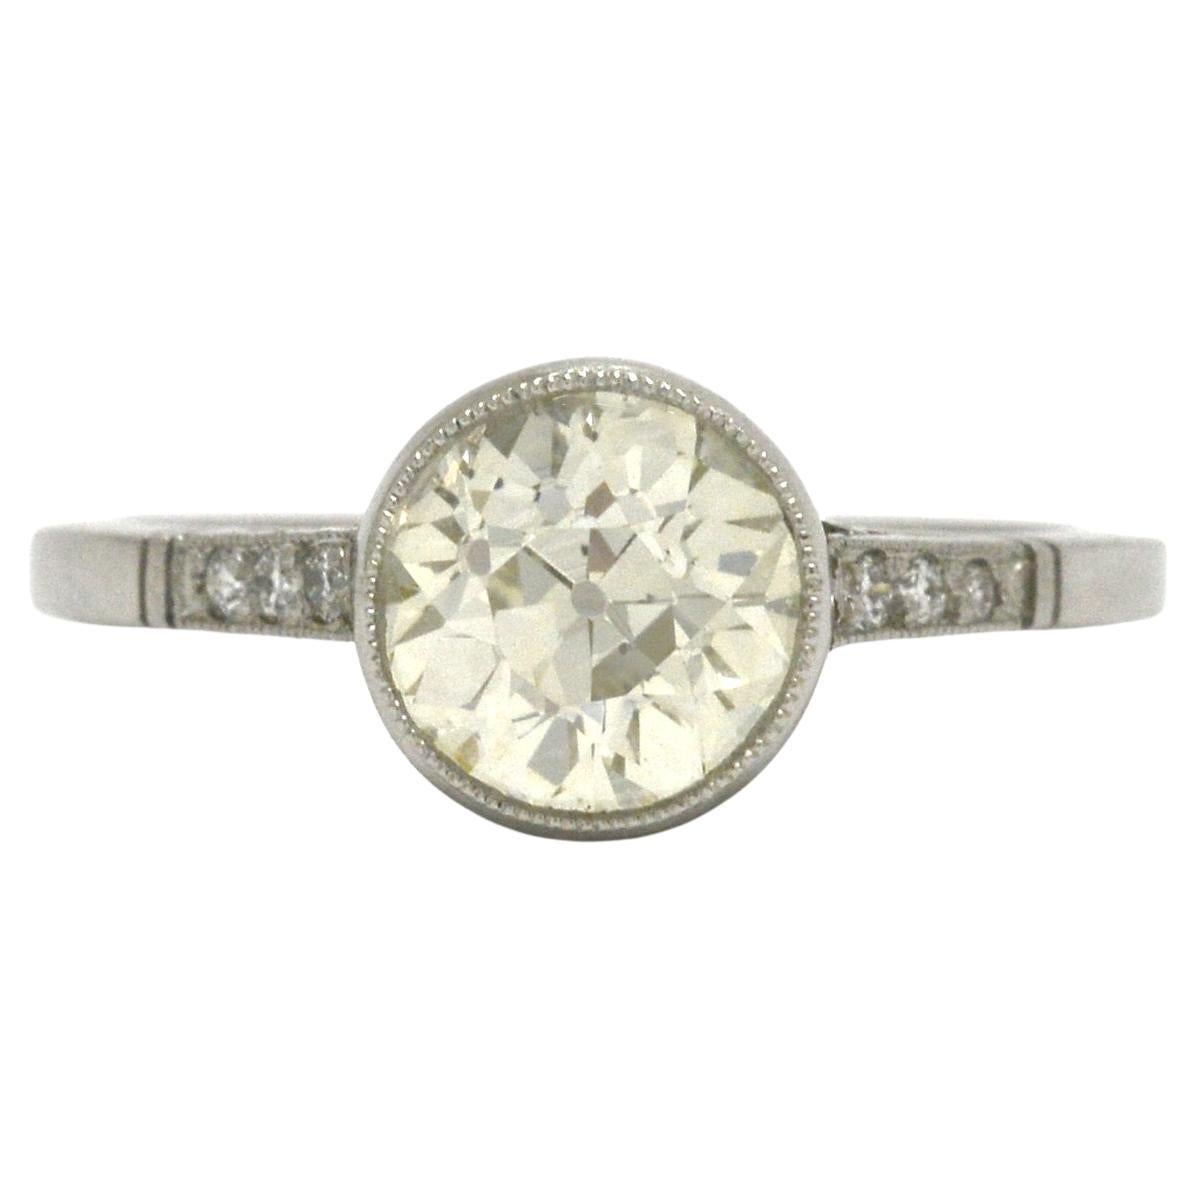 White Gemstone Ring Sterling Silver 2ct Round Cut White Gem Edwardian 1910 Etched Wedding Filigree Design#37z Custom Made